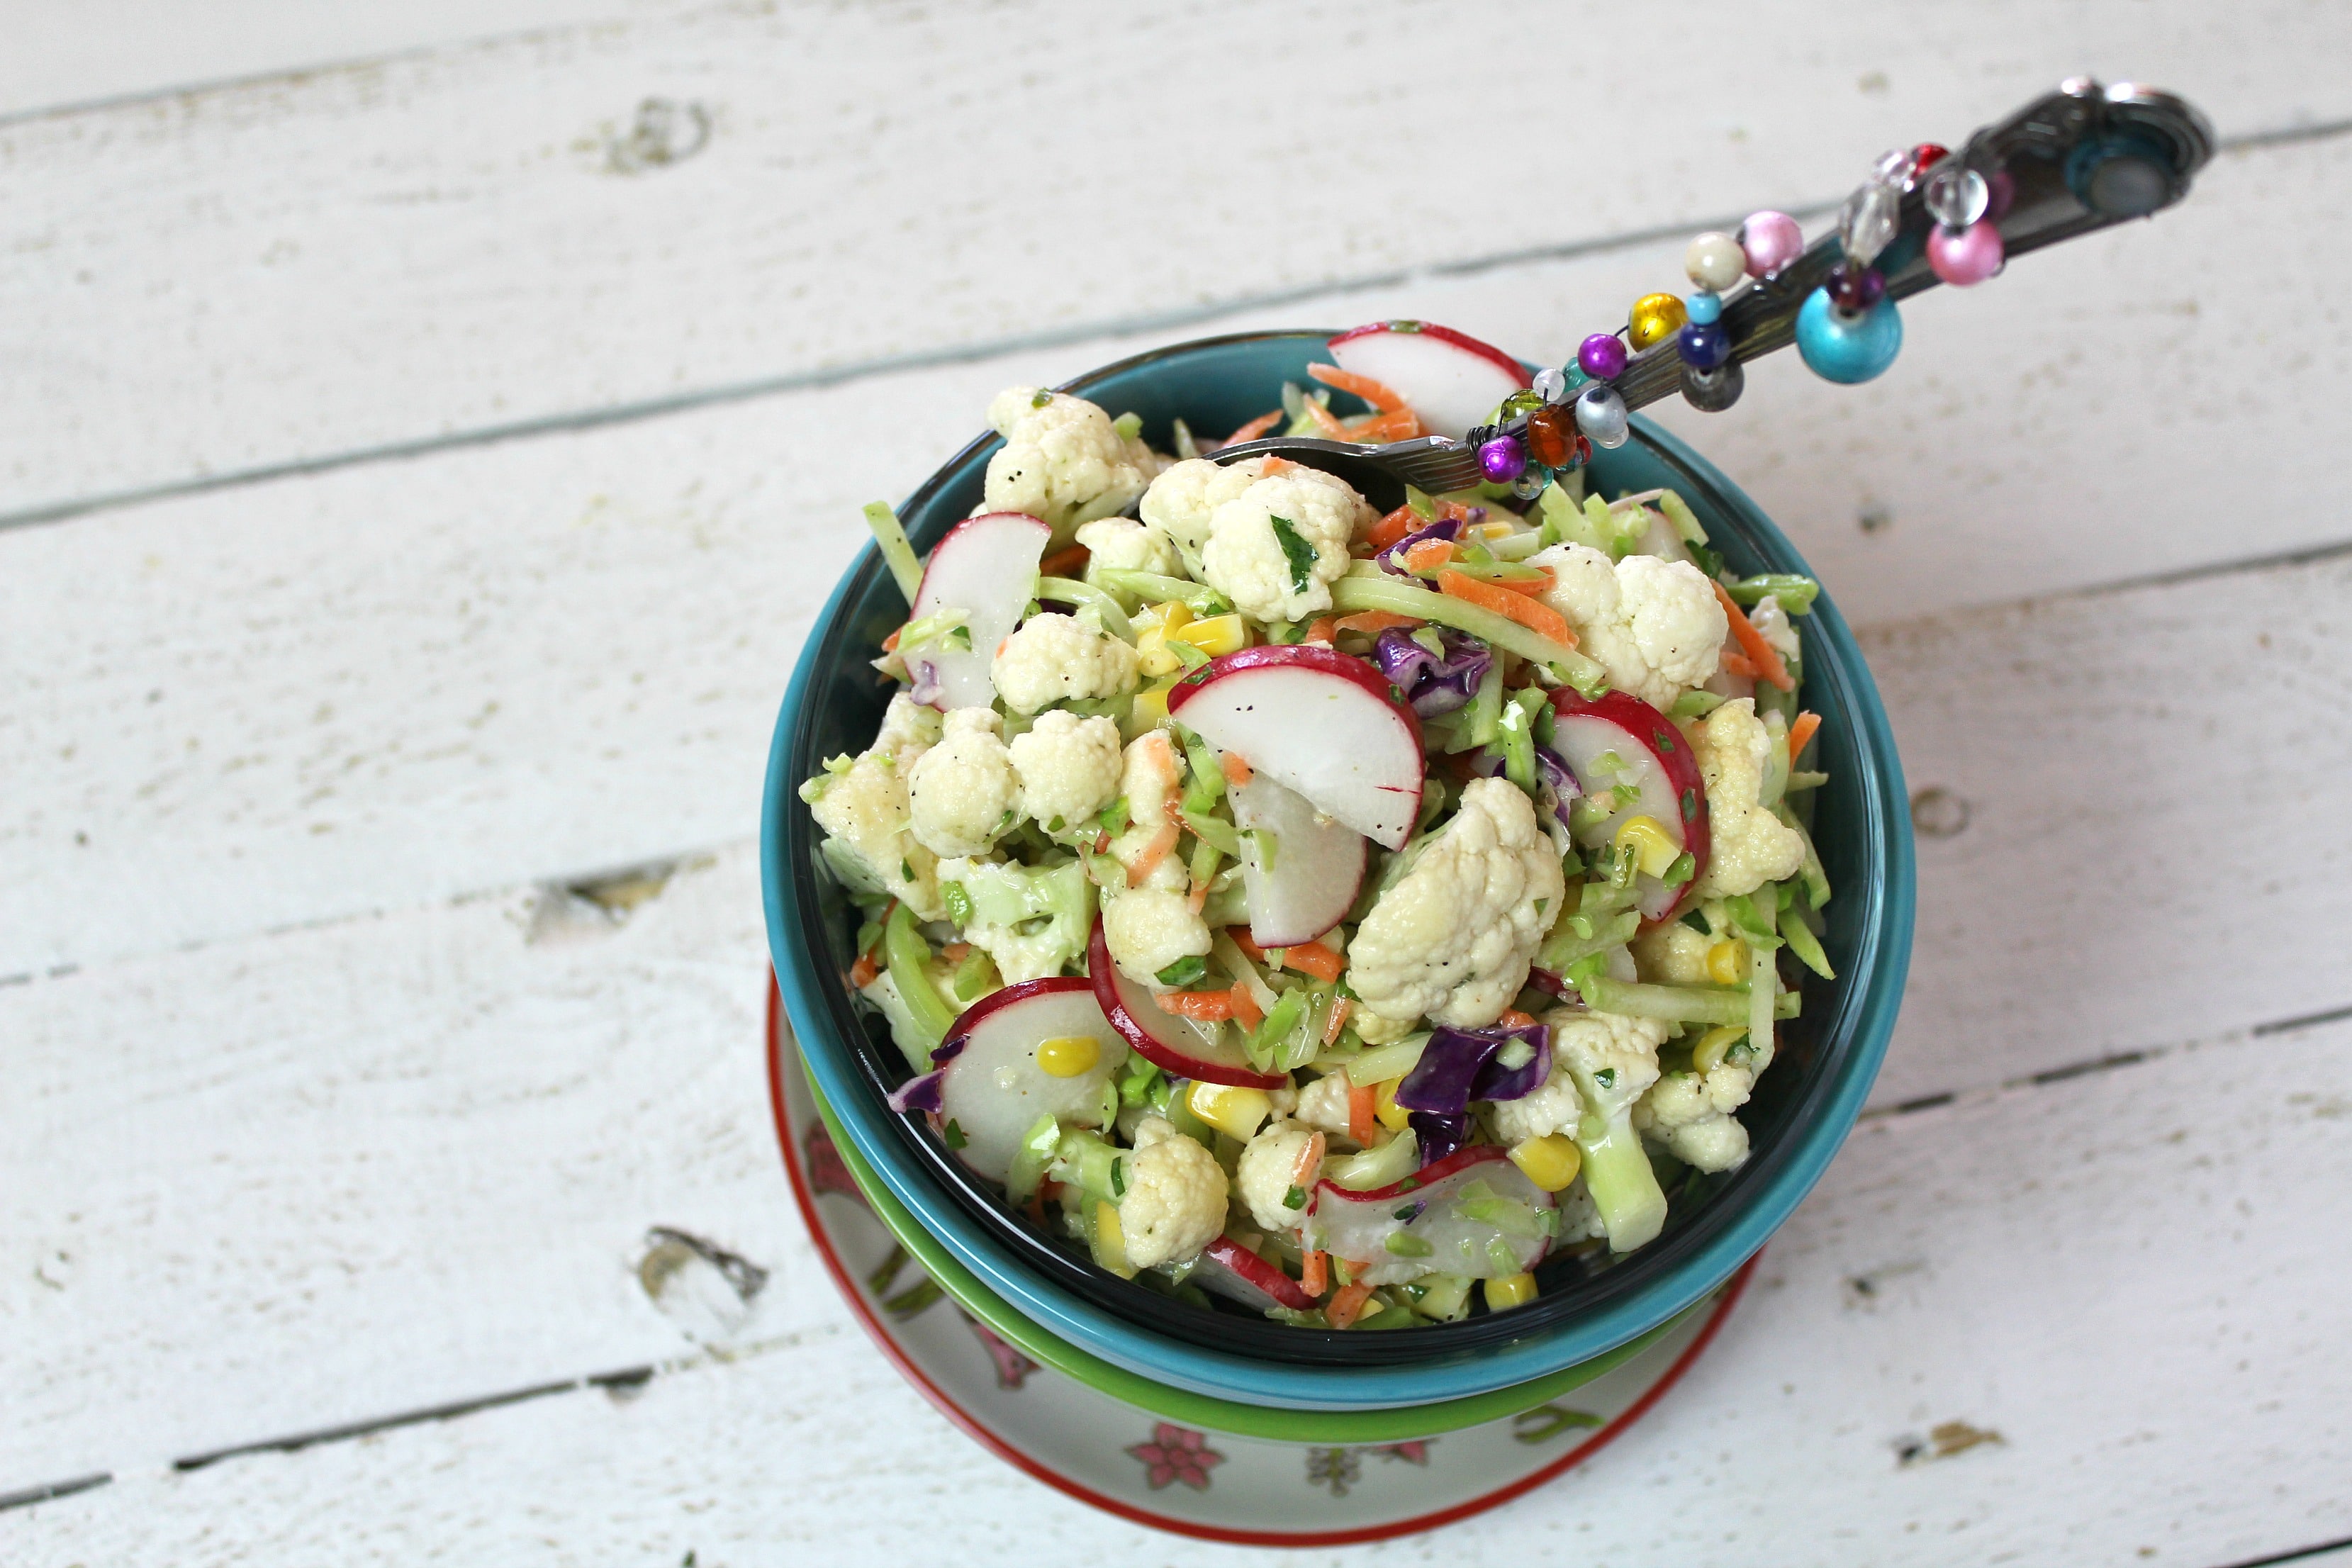 Serve seasoned salad in bowel to eat. 